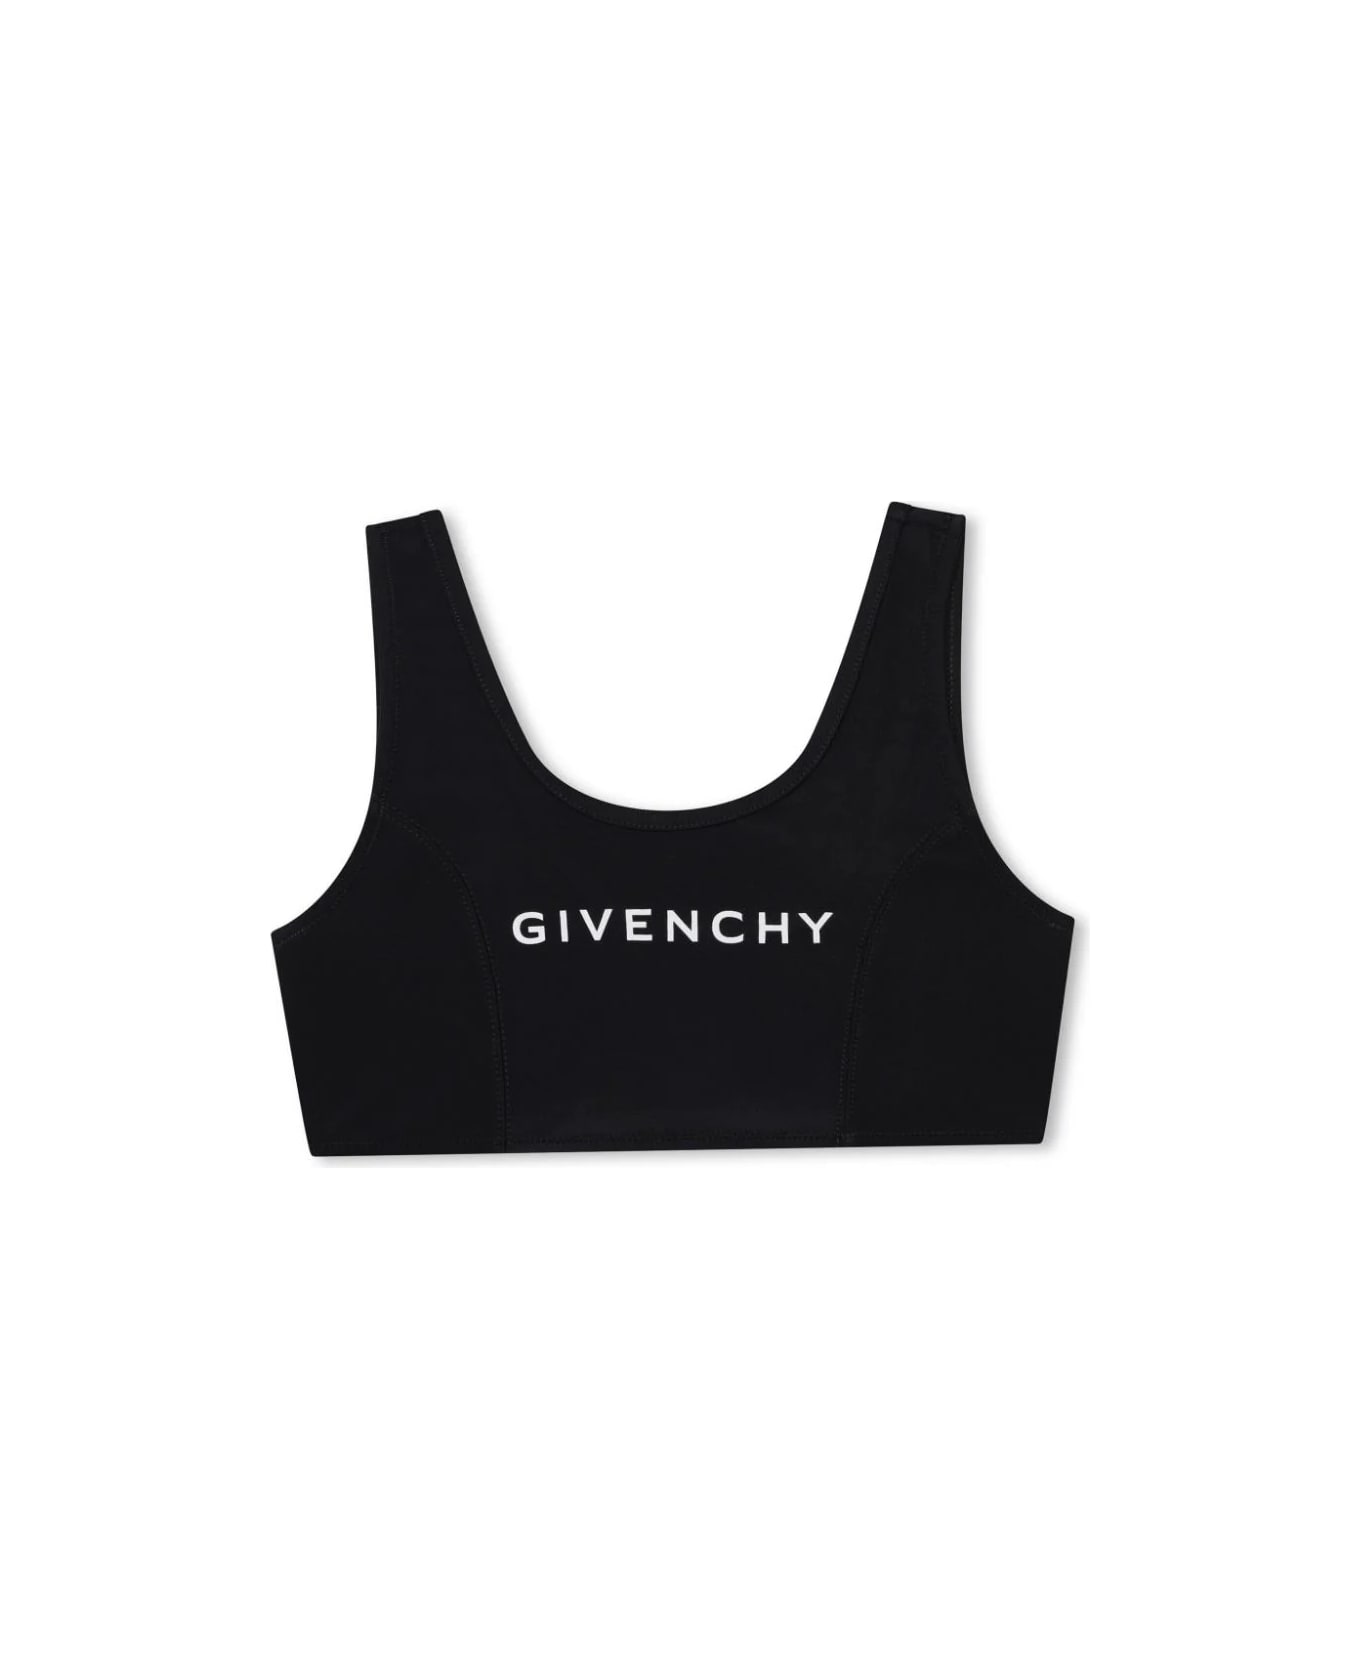 Givenchy Black Givenchy 4g Bikini - Black 水着